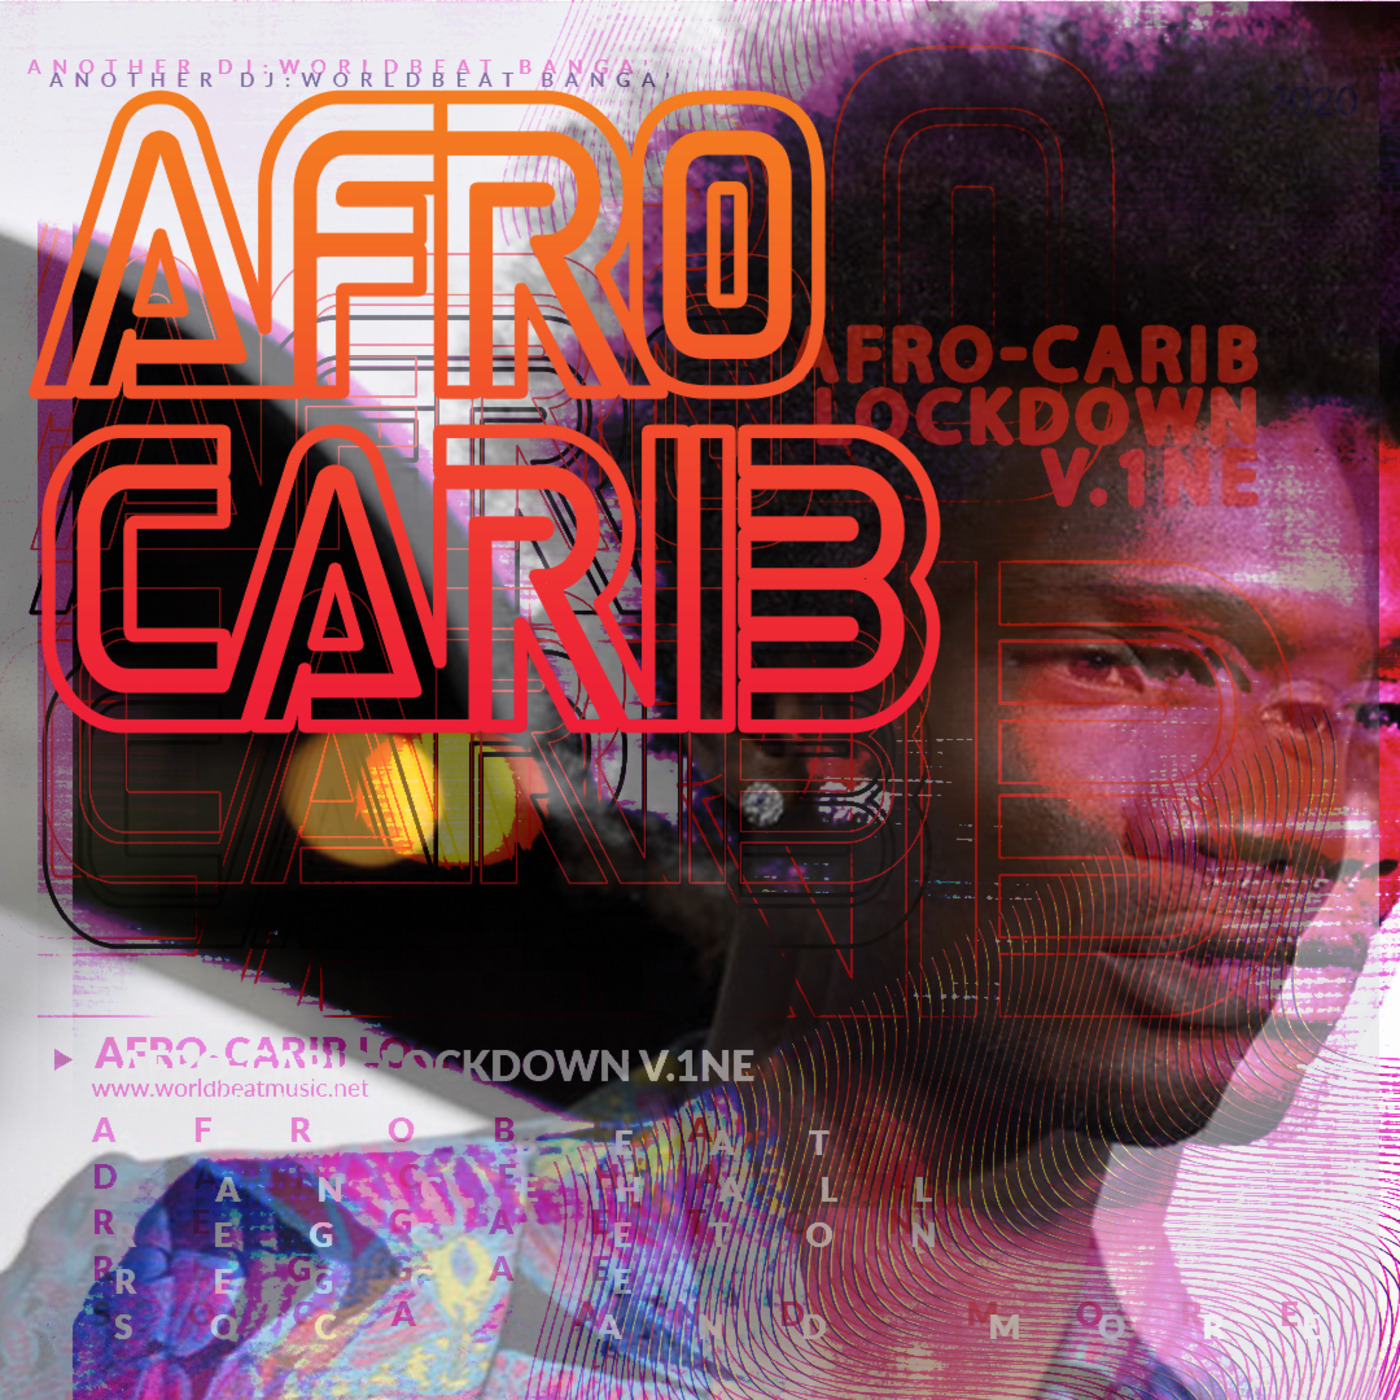 AfroCarib Lockdown v.1ne